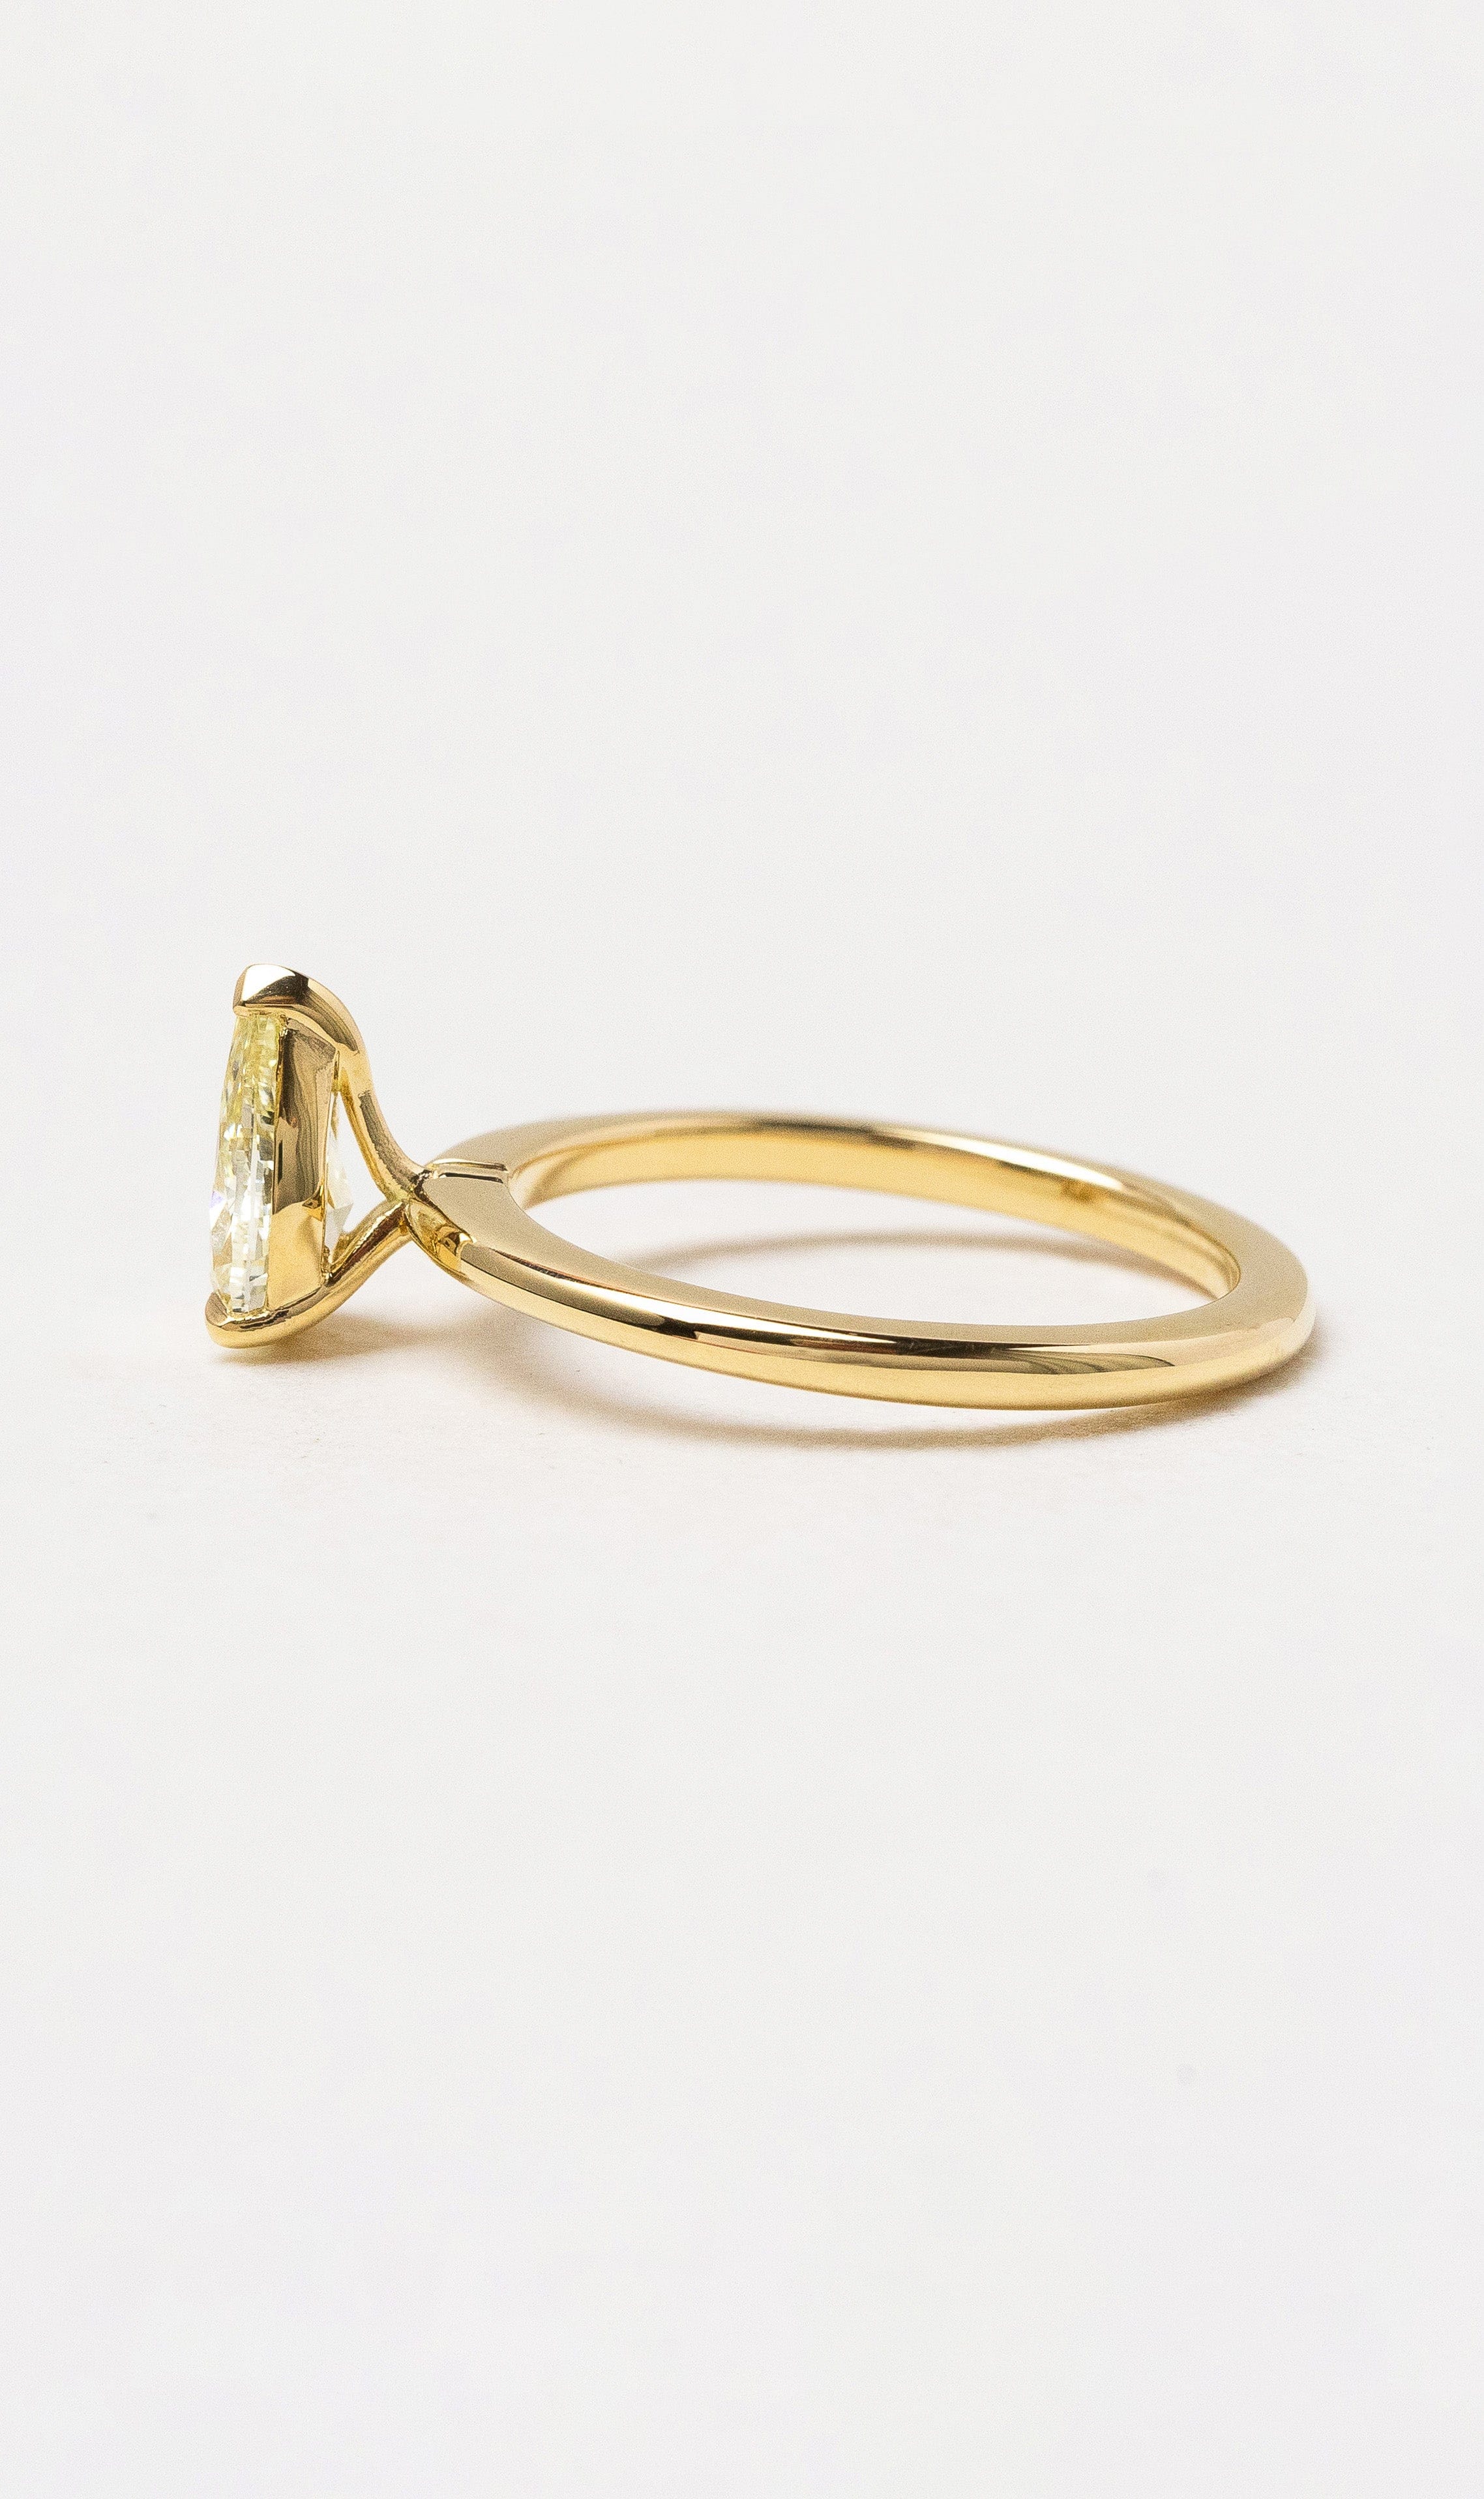 Hogans Family Jewellers 18K YG Pear Yellow Diamond Ring